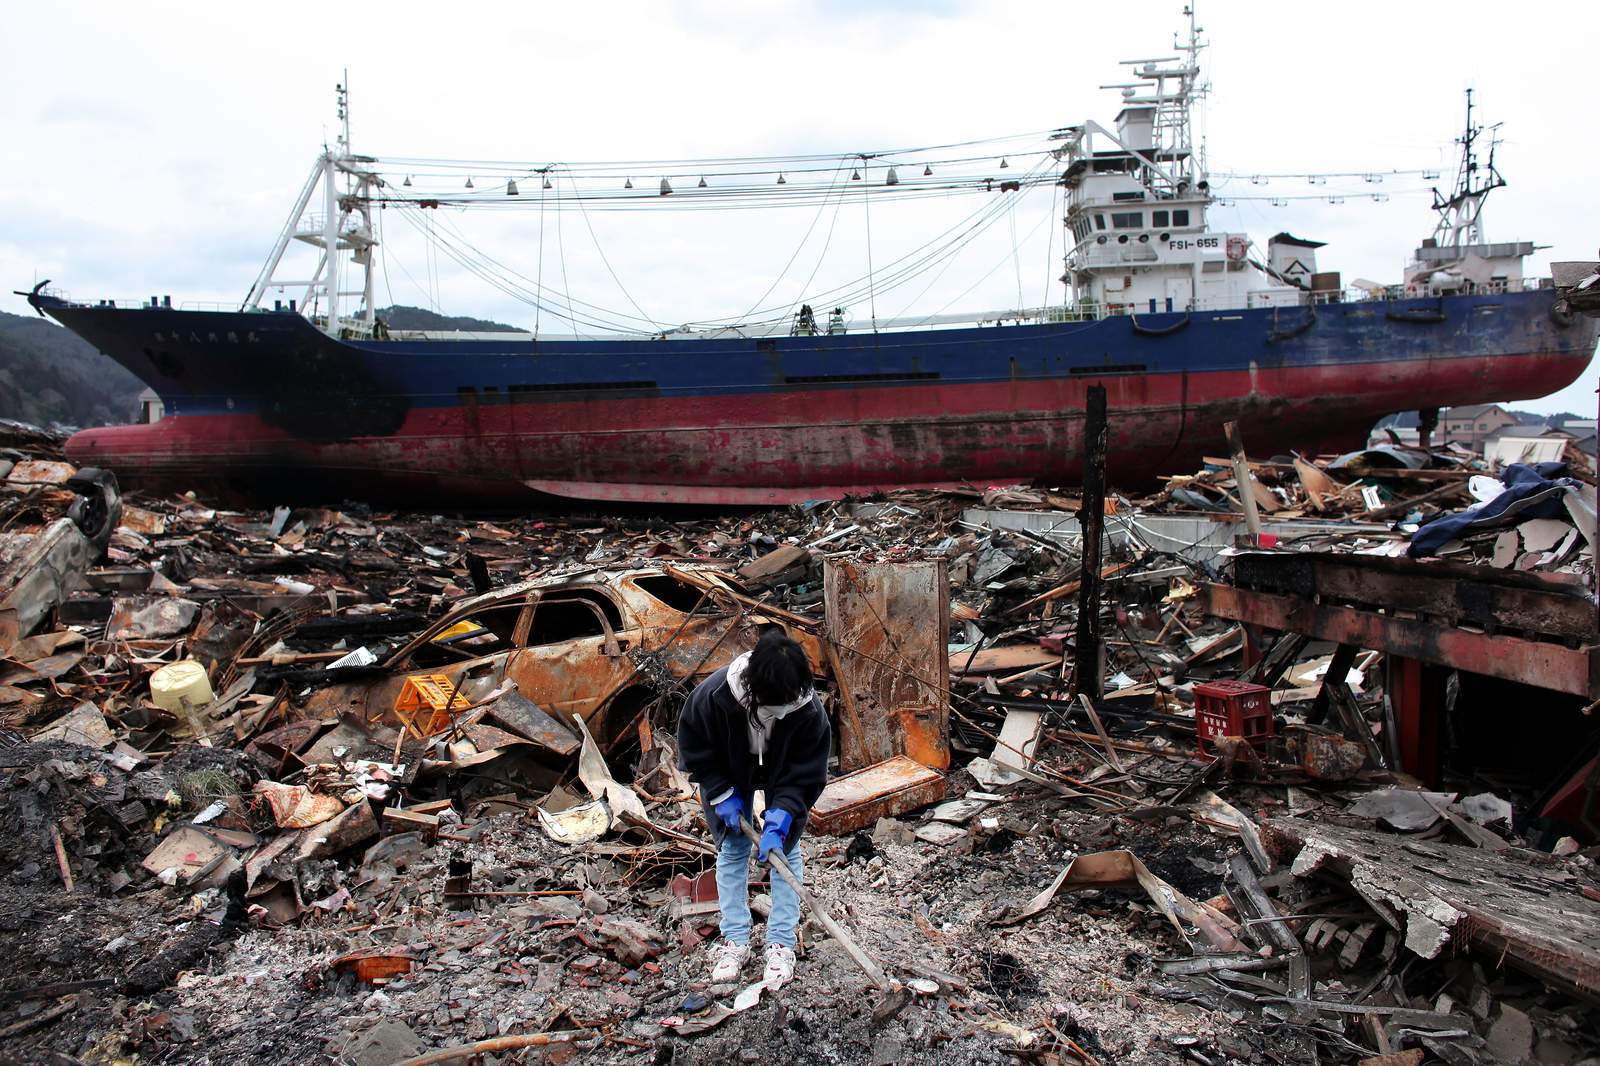 Still recovering, Japan marks 10 years since tsunami hit